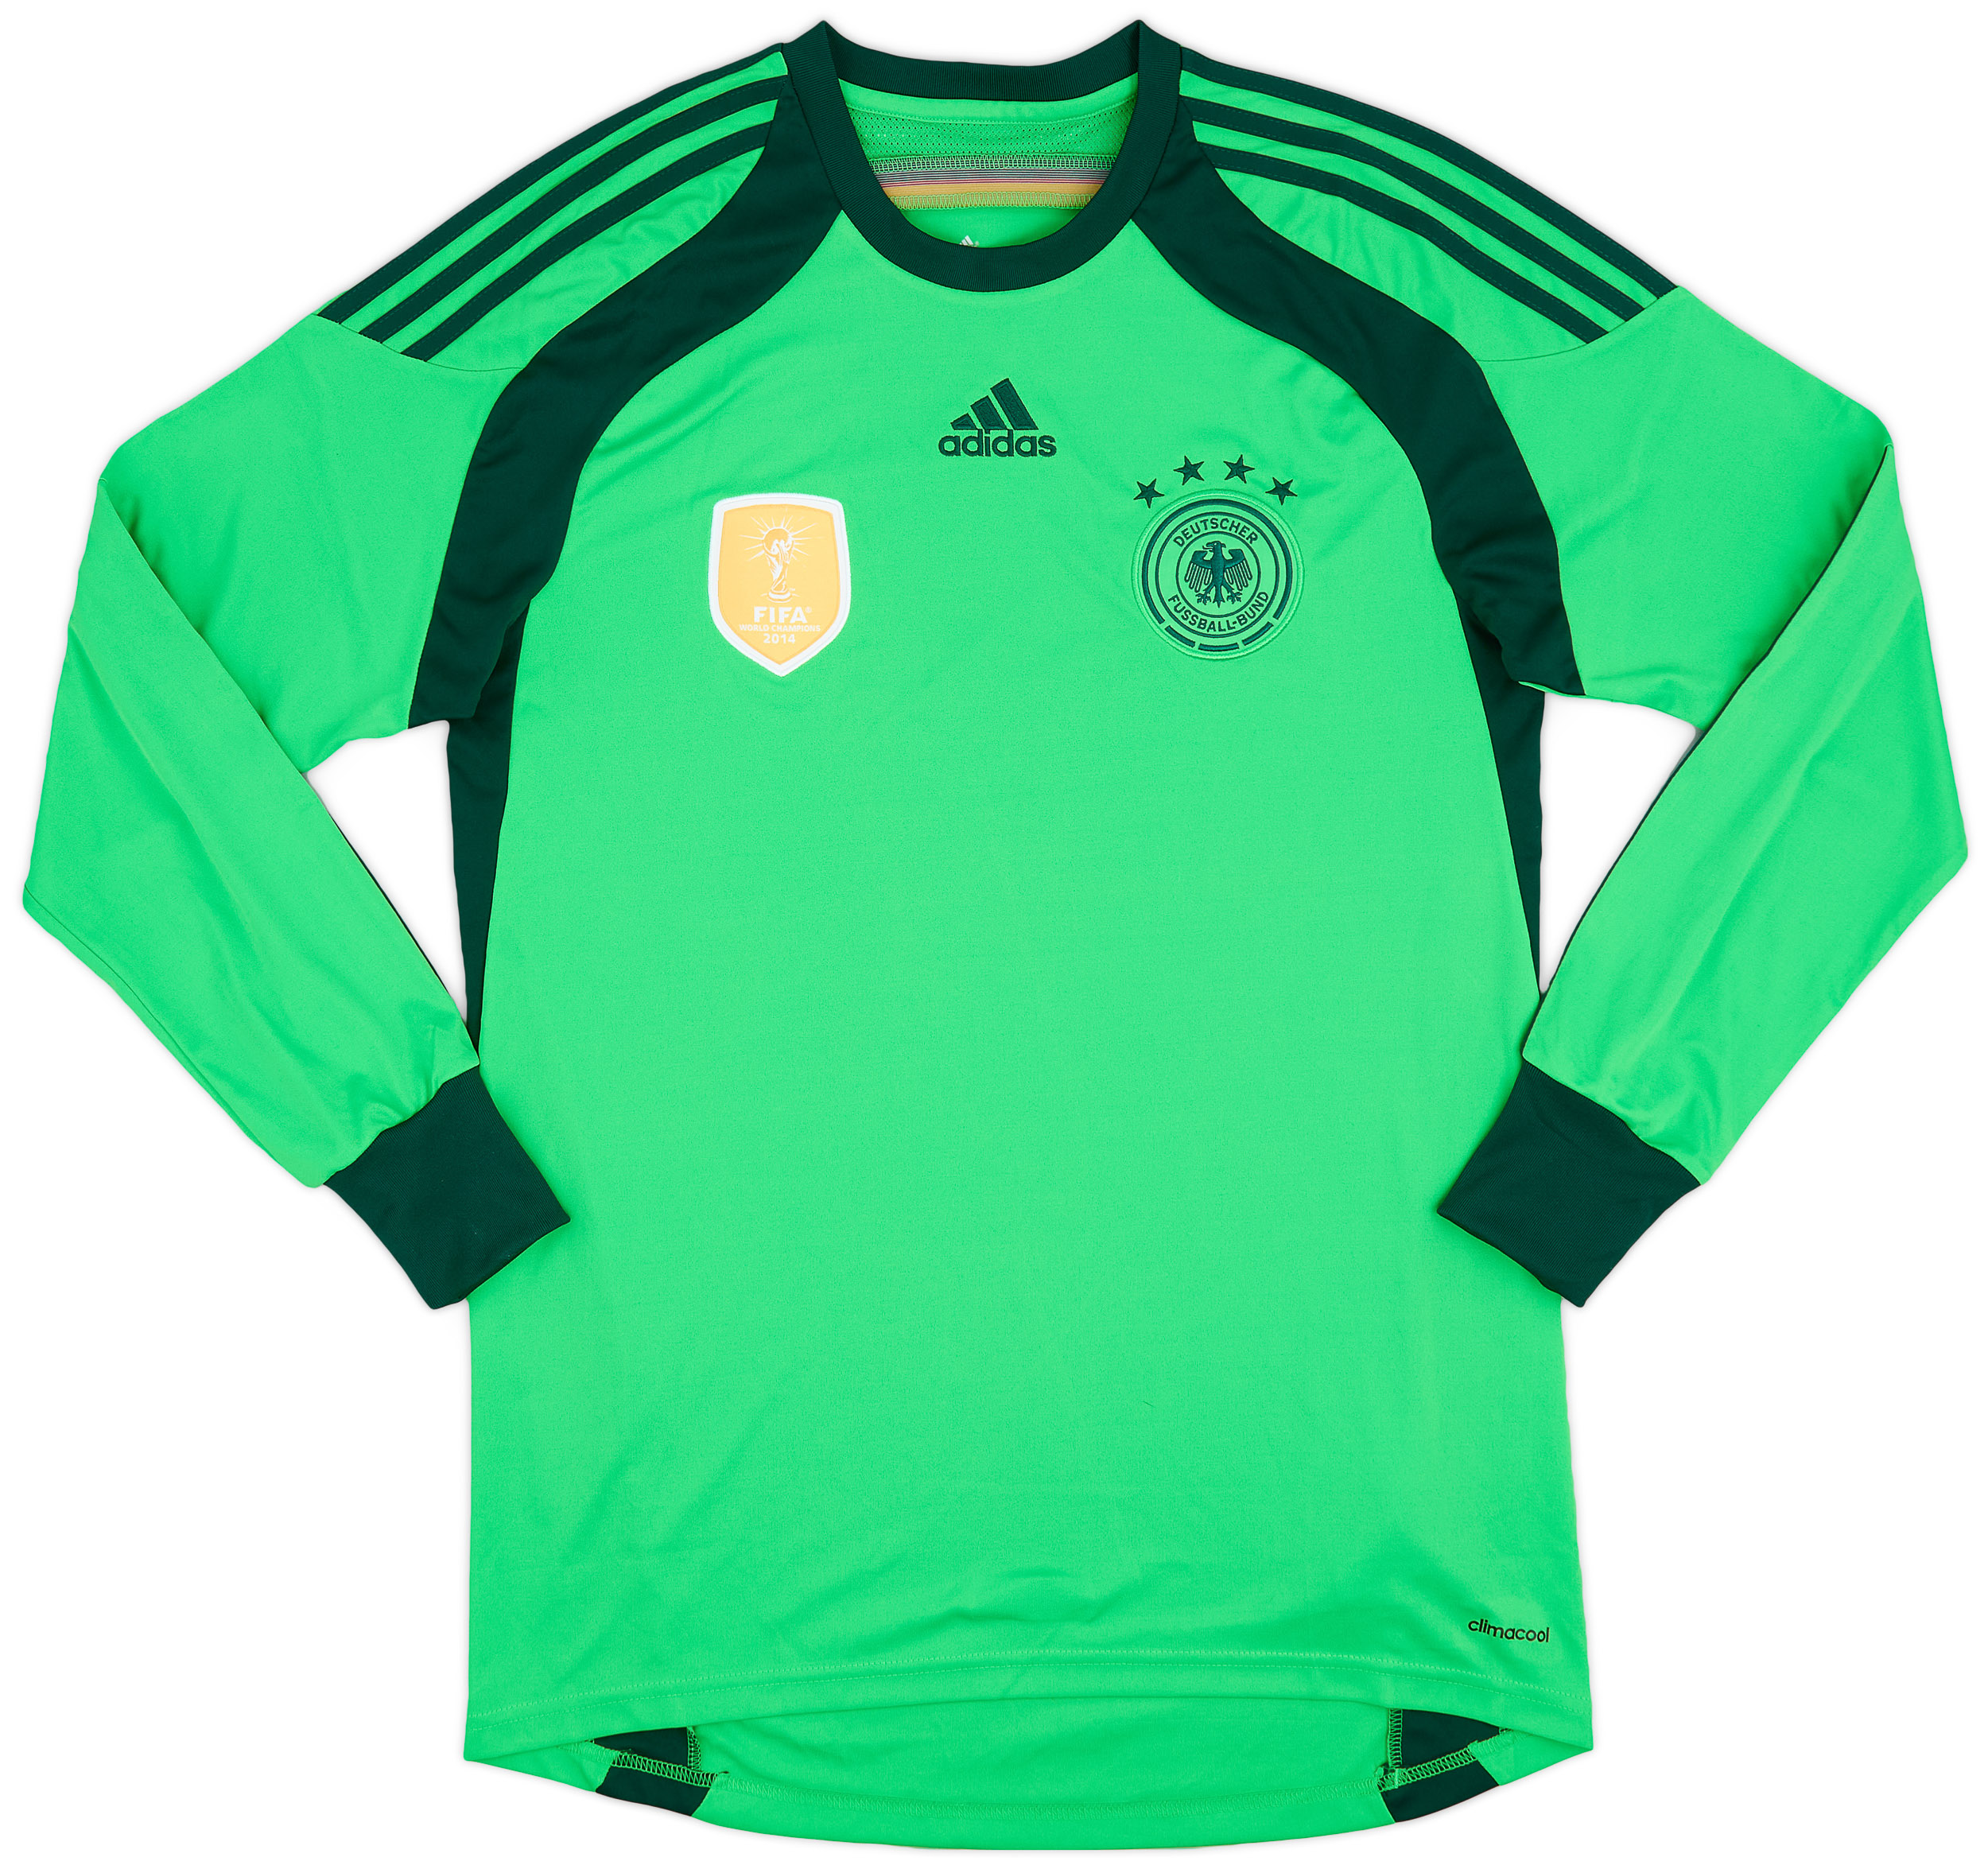 2014-15 Germany GK Shirt - 10/10 - ()